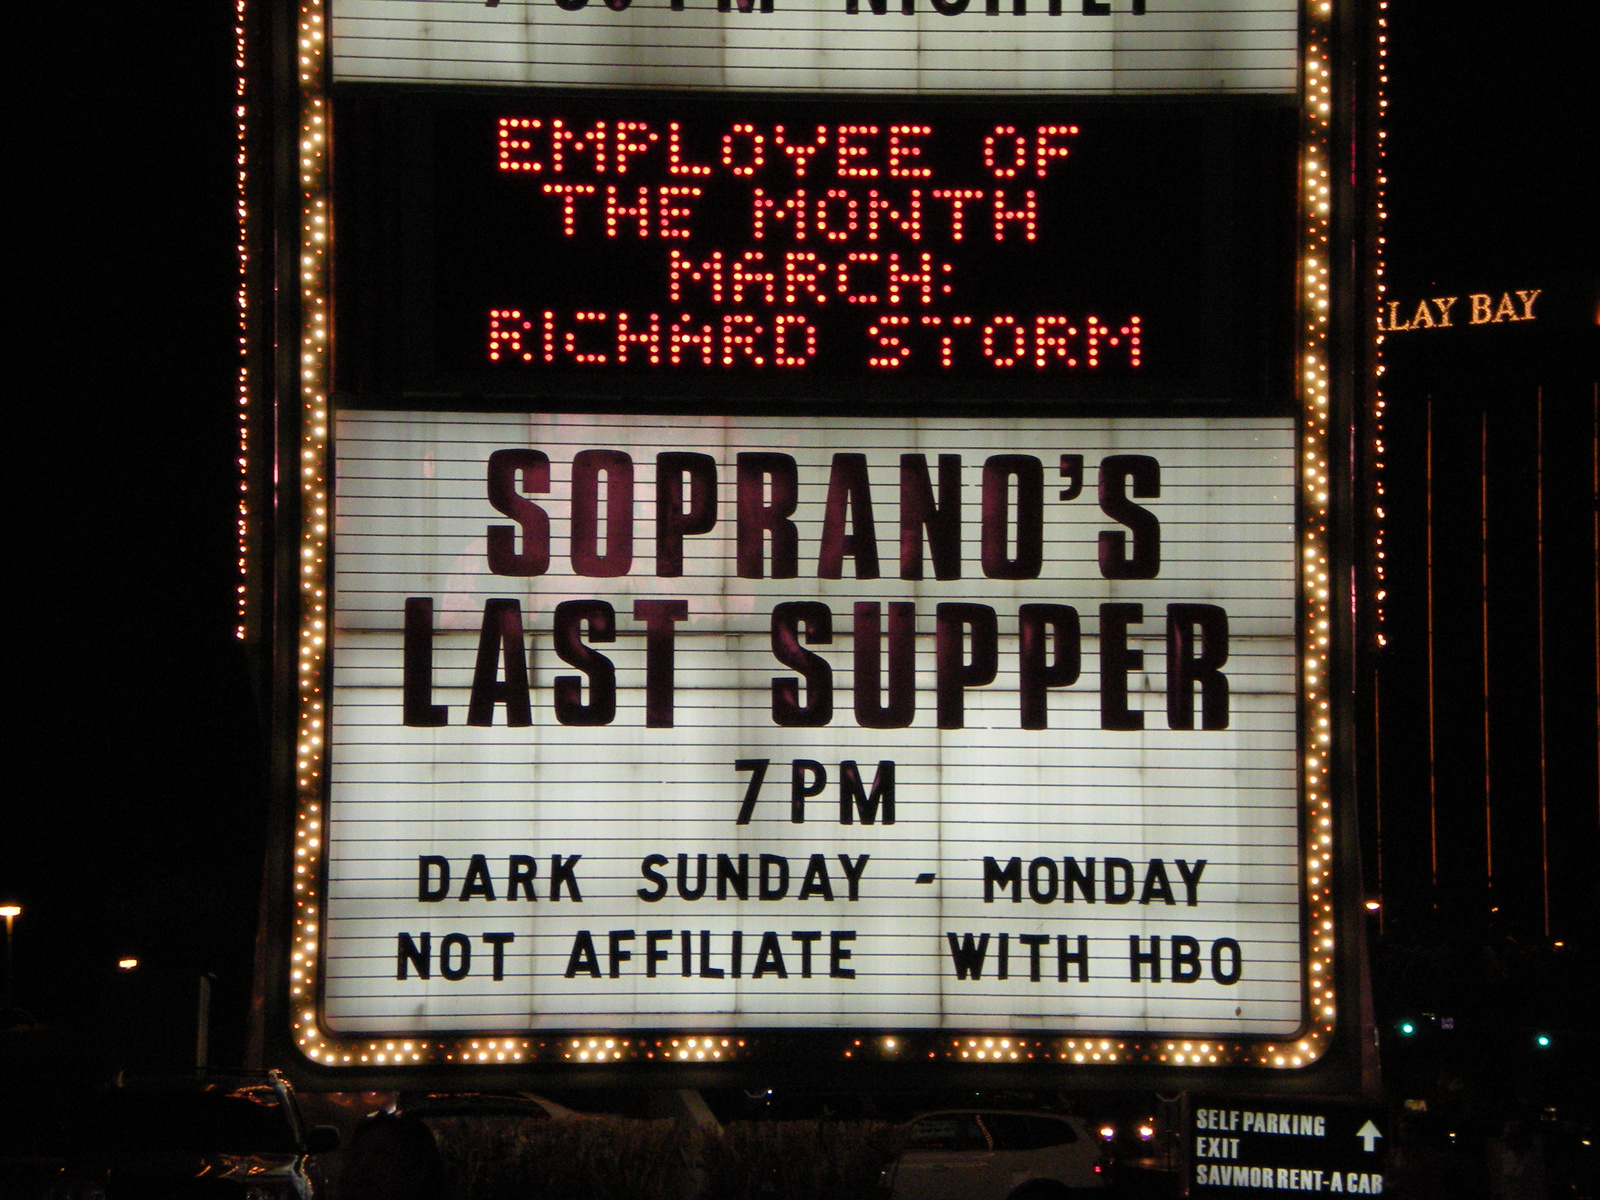 Sopranos Last Supper